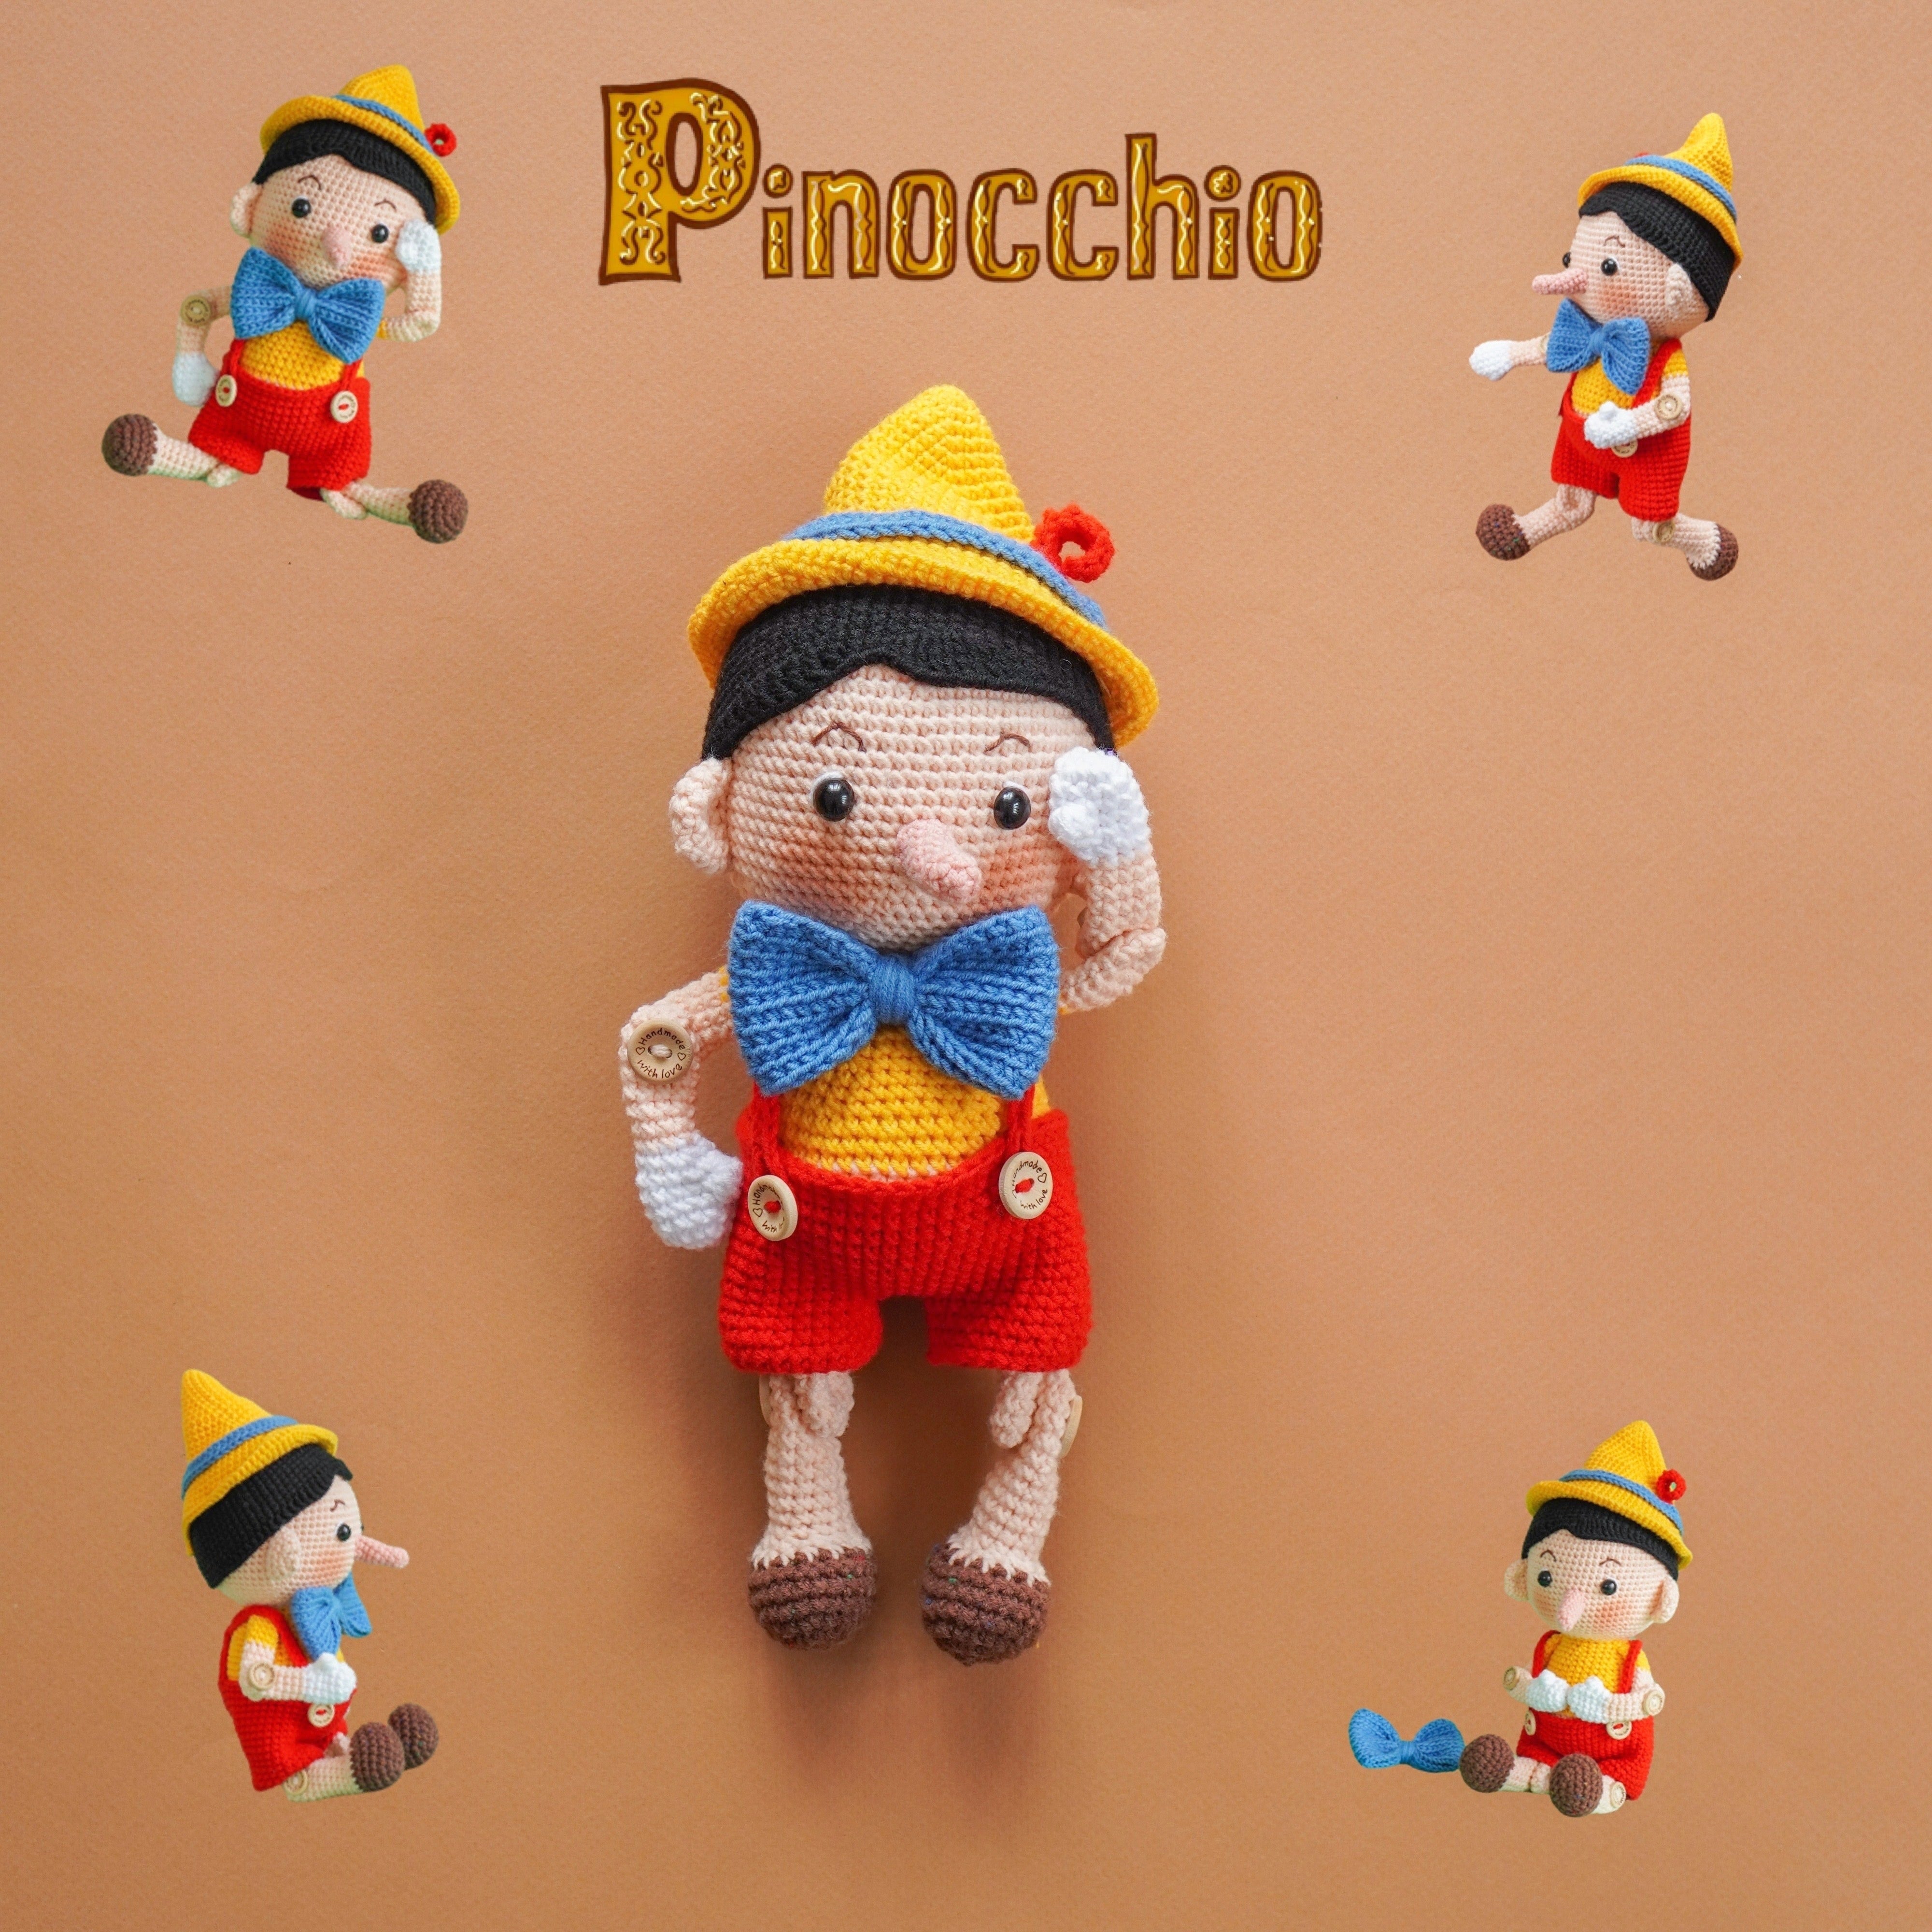 Pinocchio Crochet Pattern by Aquariwool Crochet (Crochet Doll Pattern/Amigurumi Pattern for Baby gift)